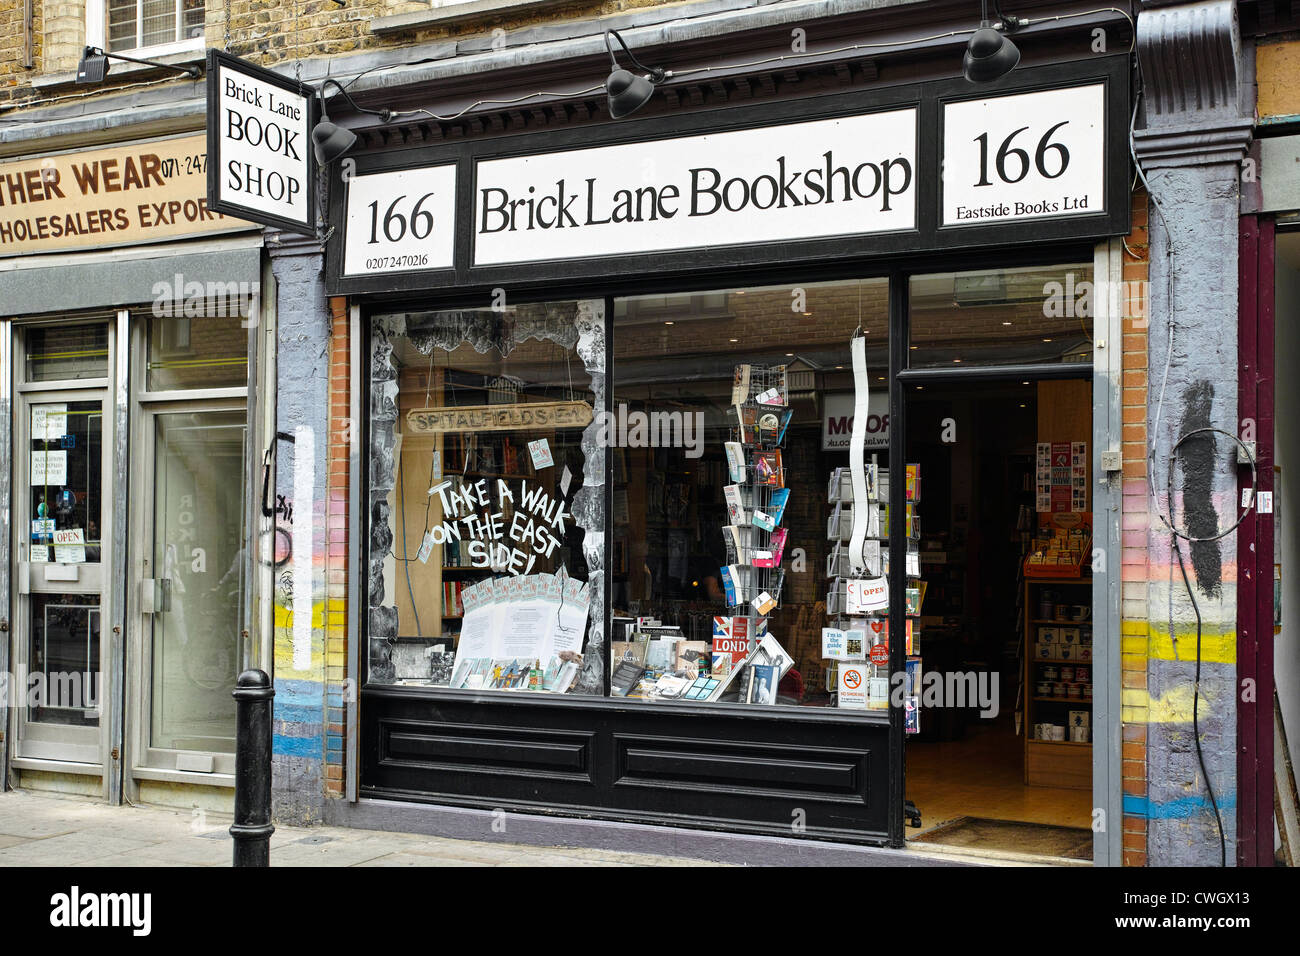 Brick Lane Book Shop Stock Photo